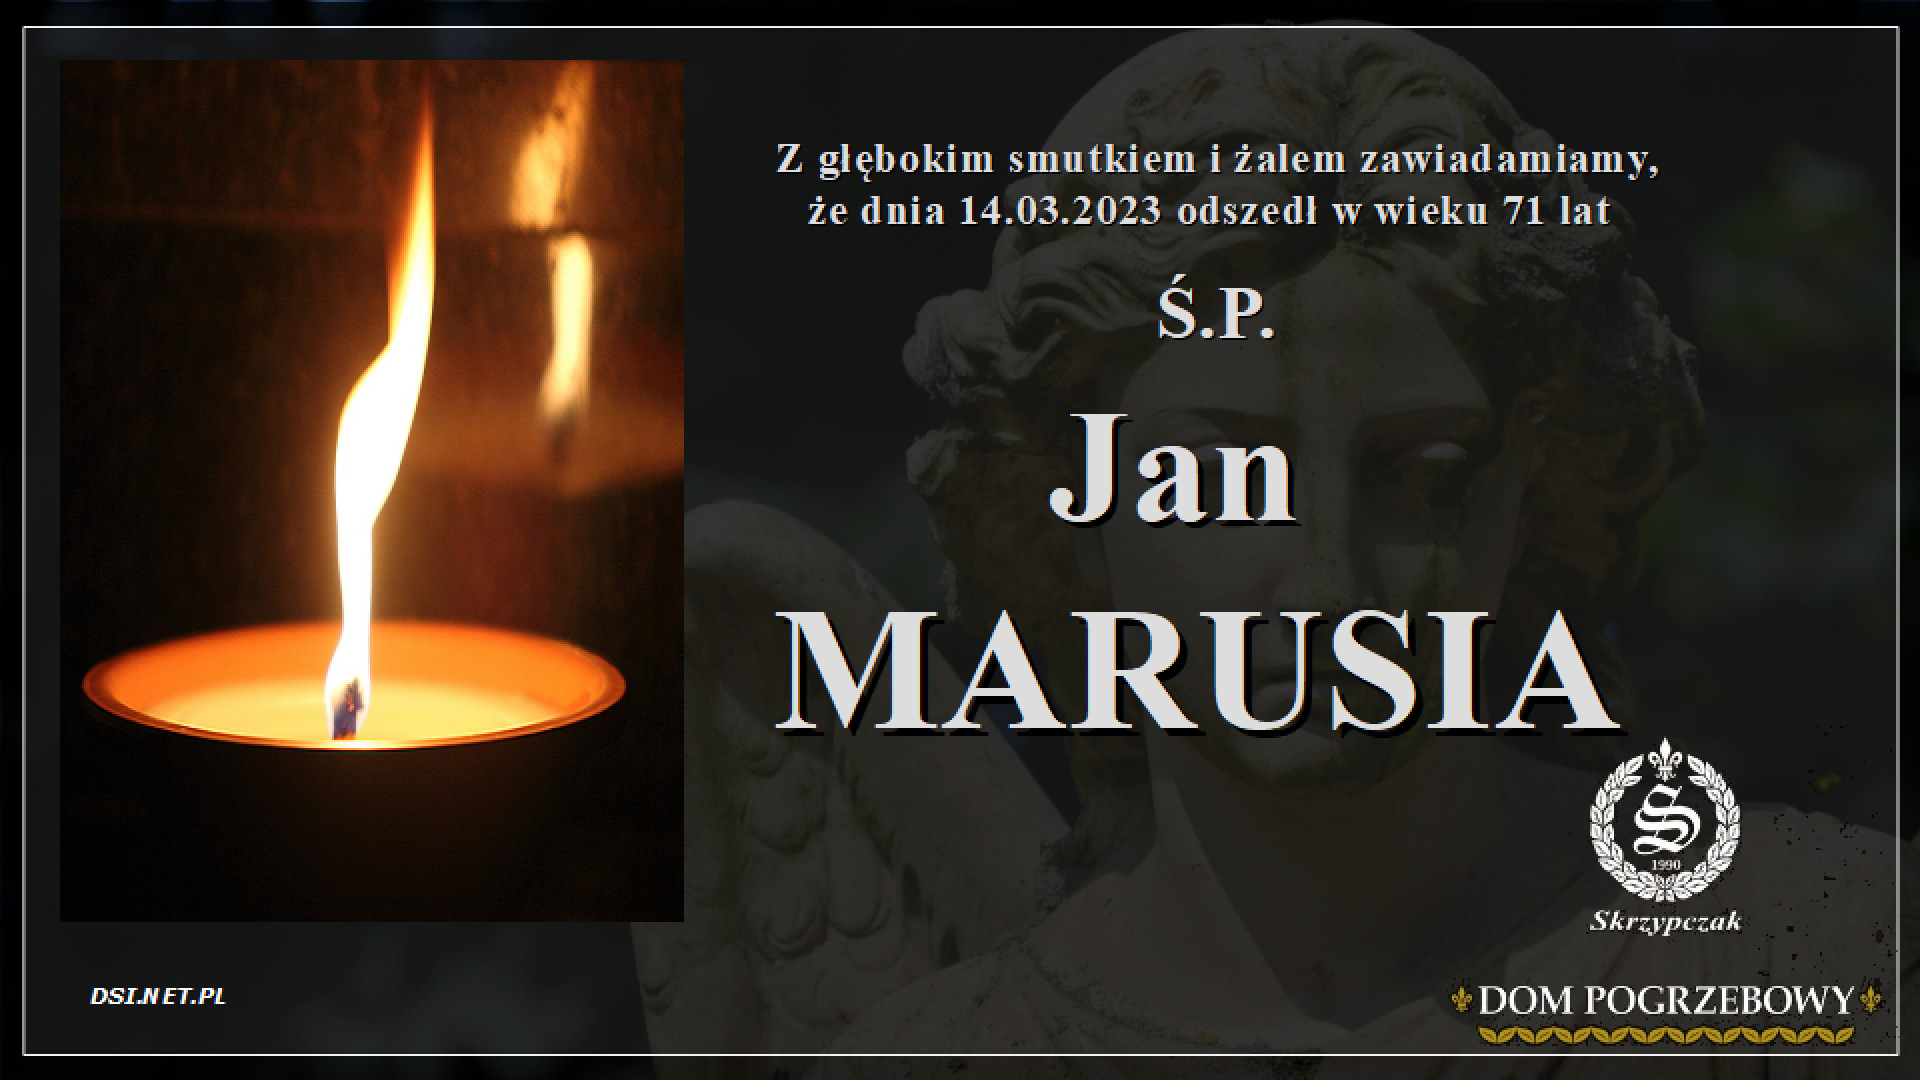 Ś.P. Jan Marusia